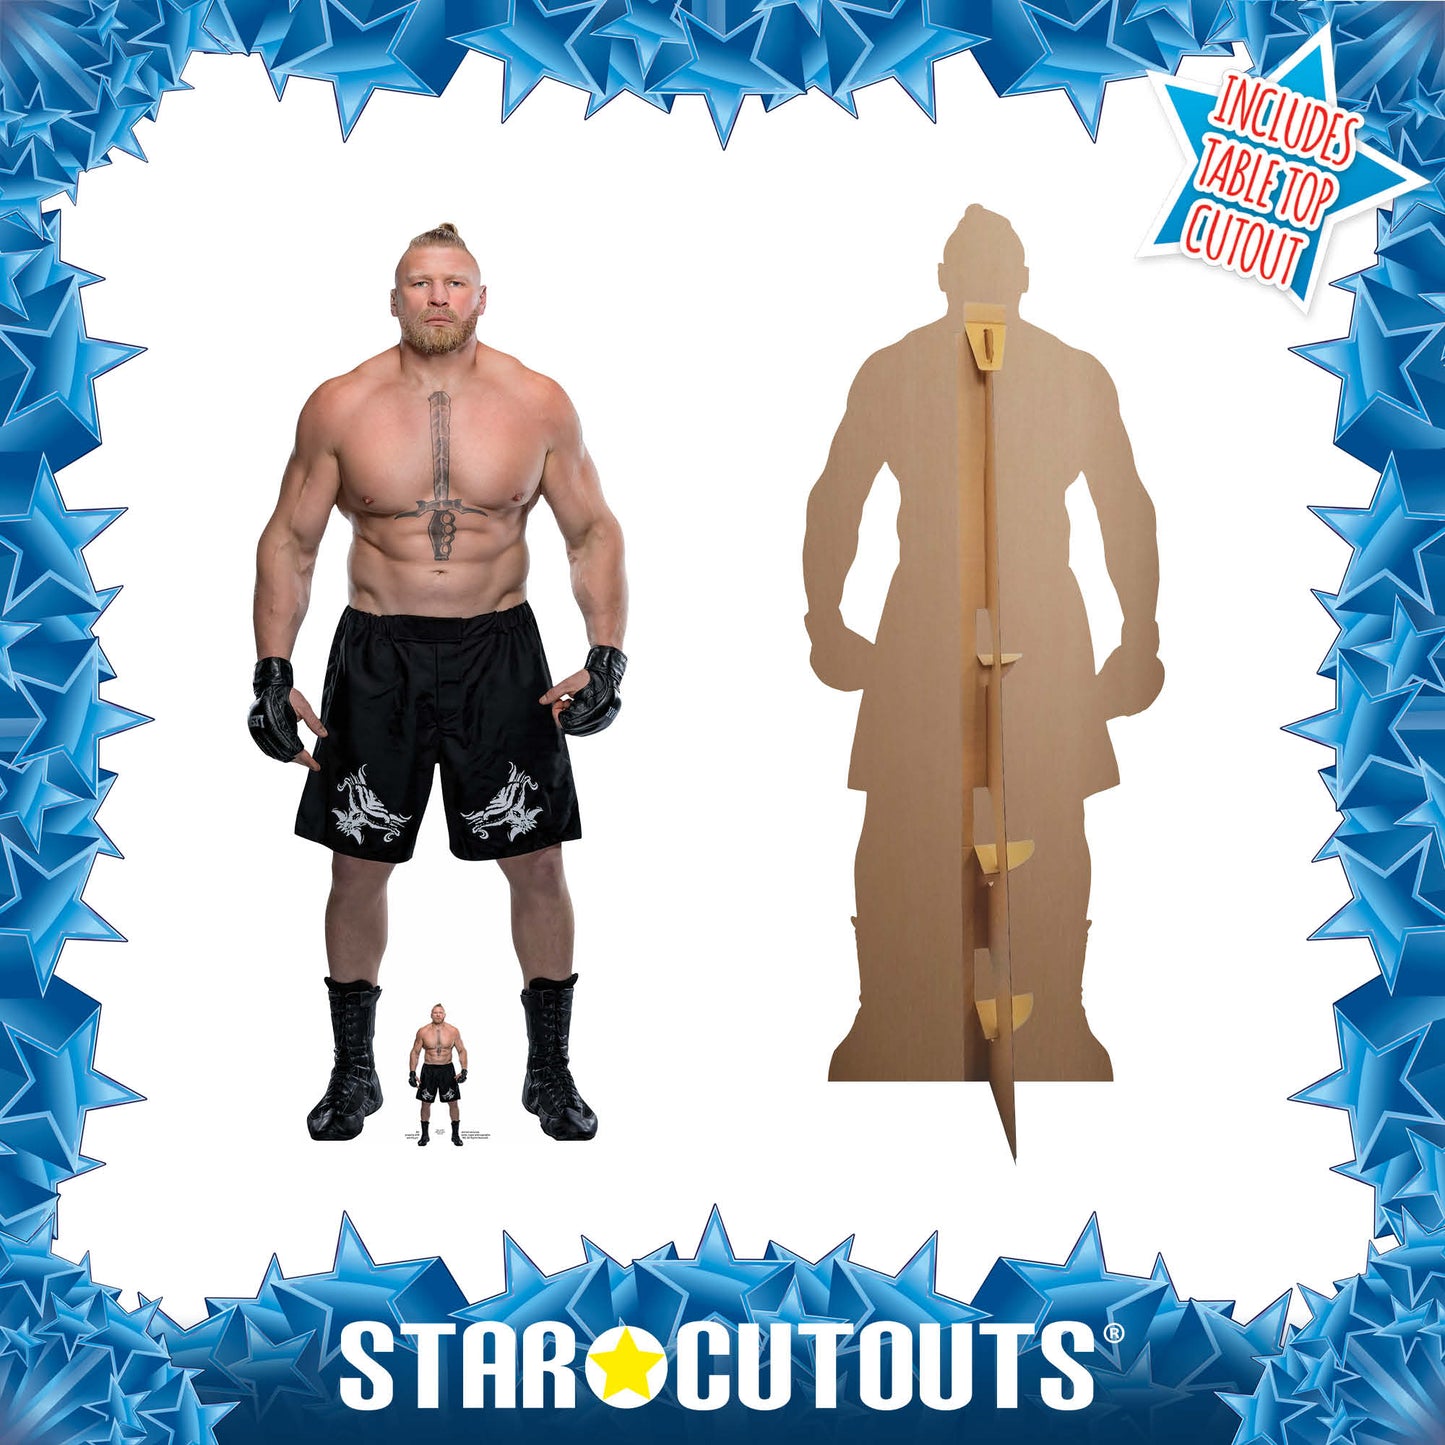 Brock Lesnar WWE Cardboard Cutout Lifesize